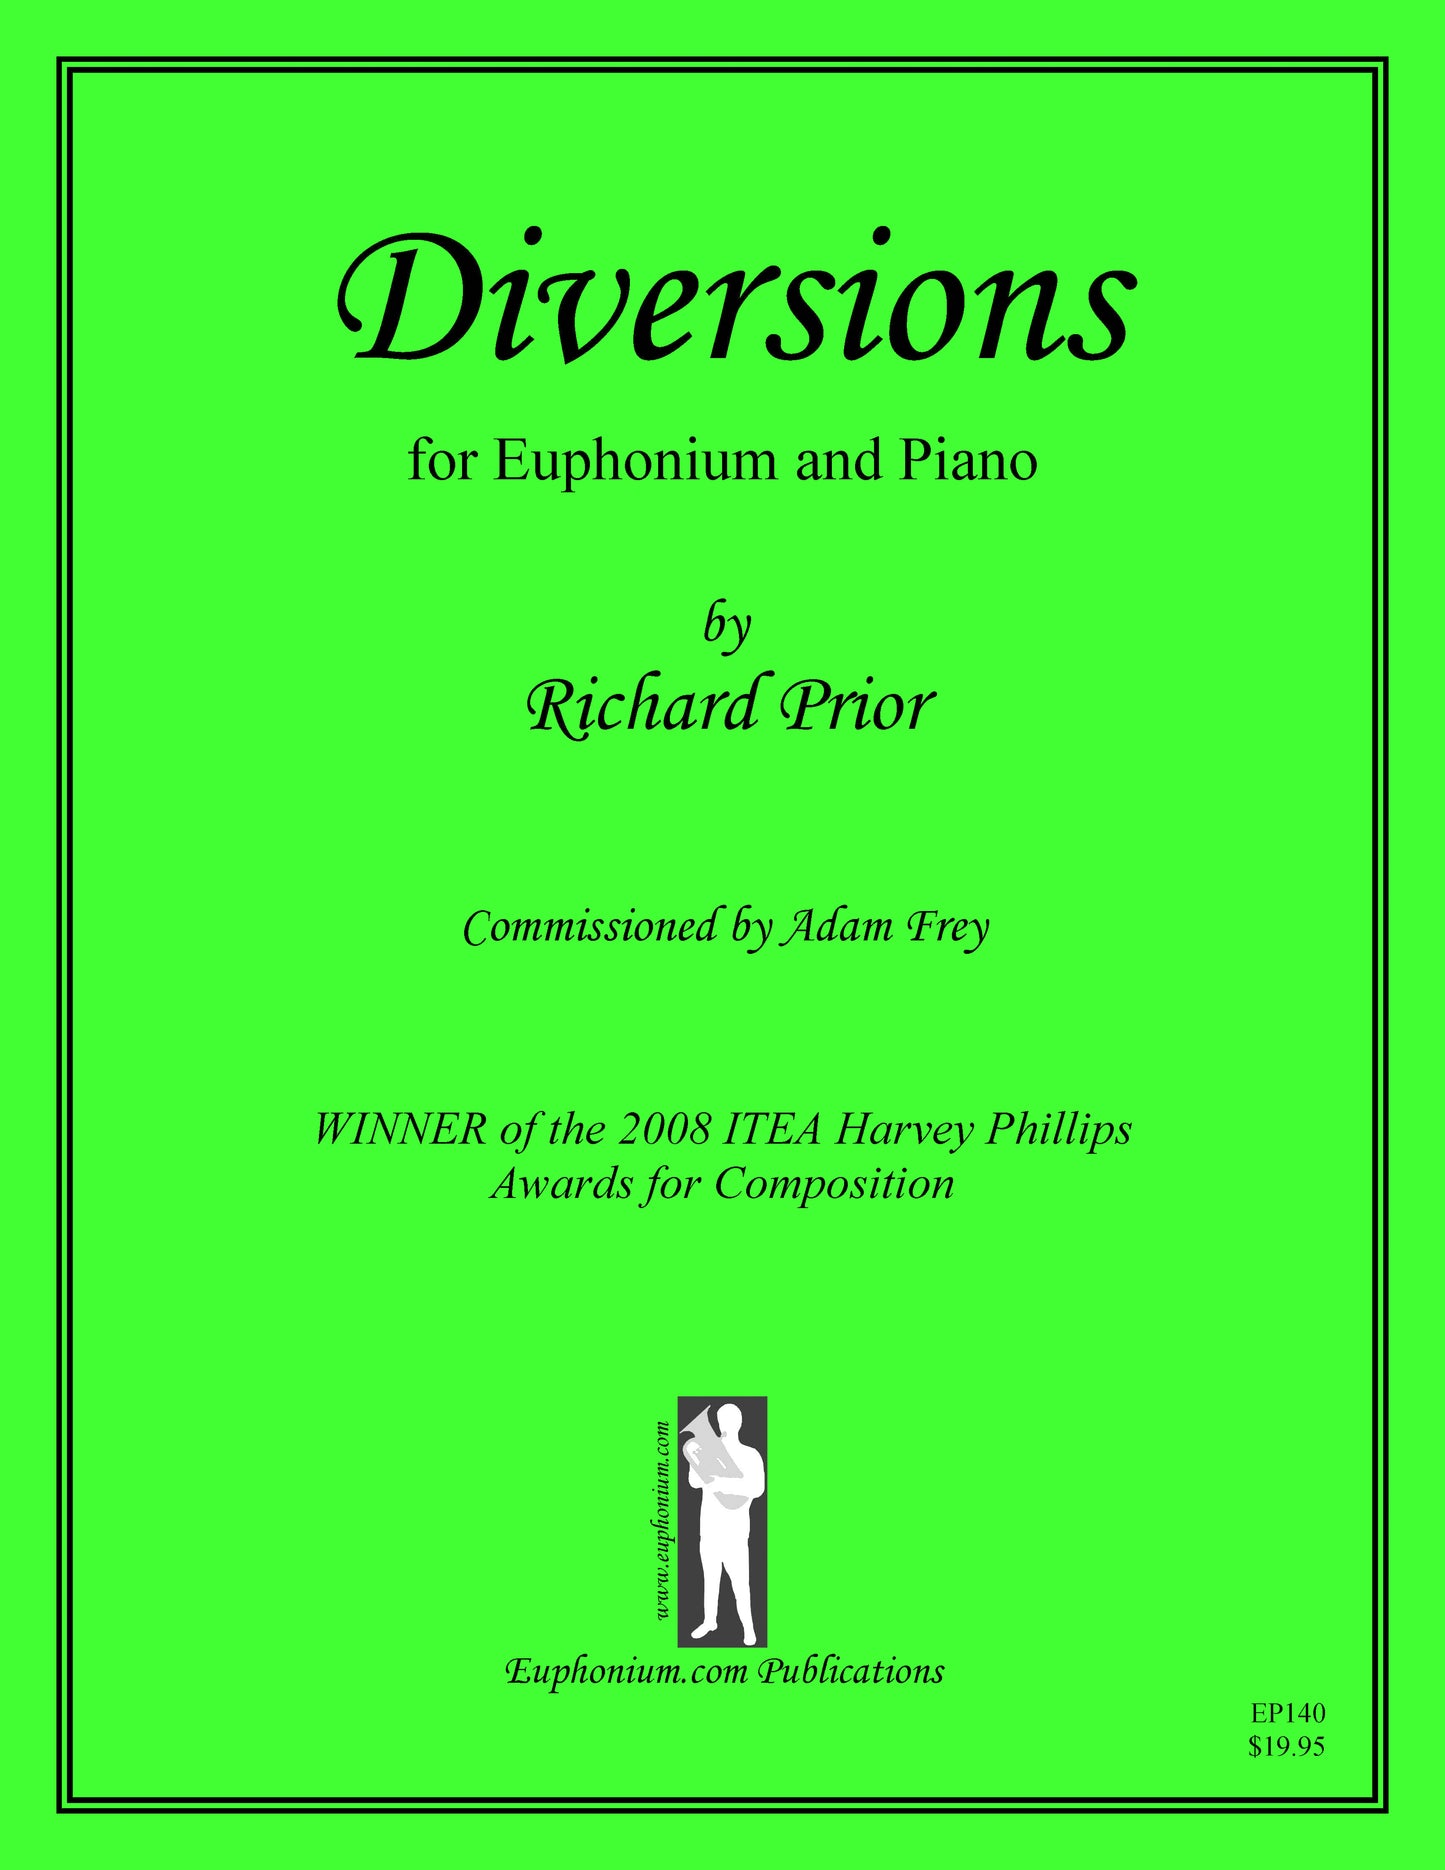 Prior, Richard - Diversions